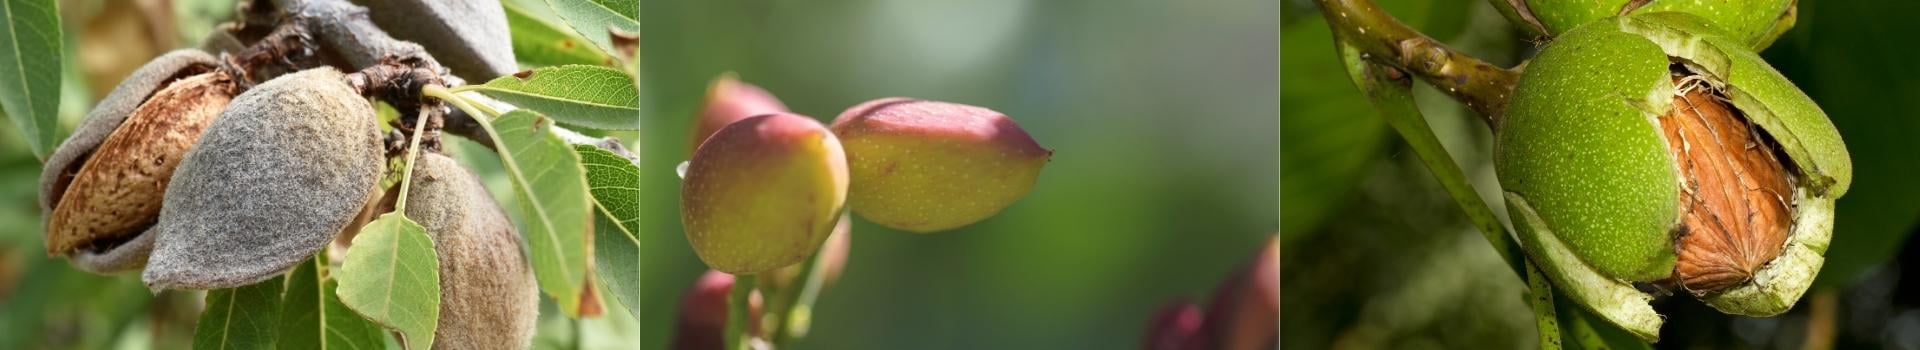 almond, pistachio, walnut disease models - cover photo